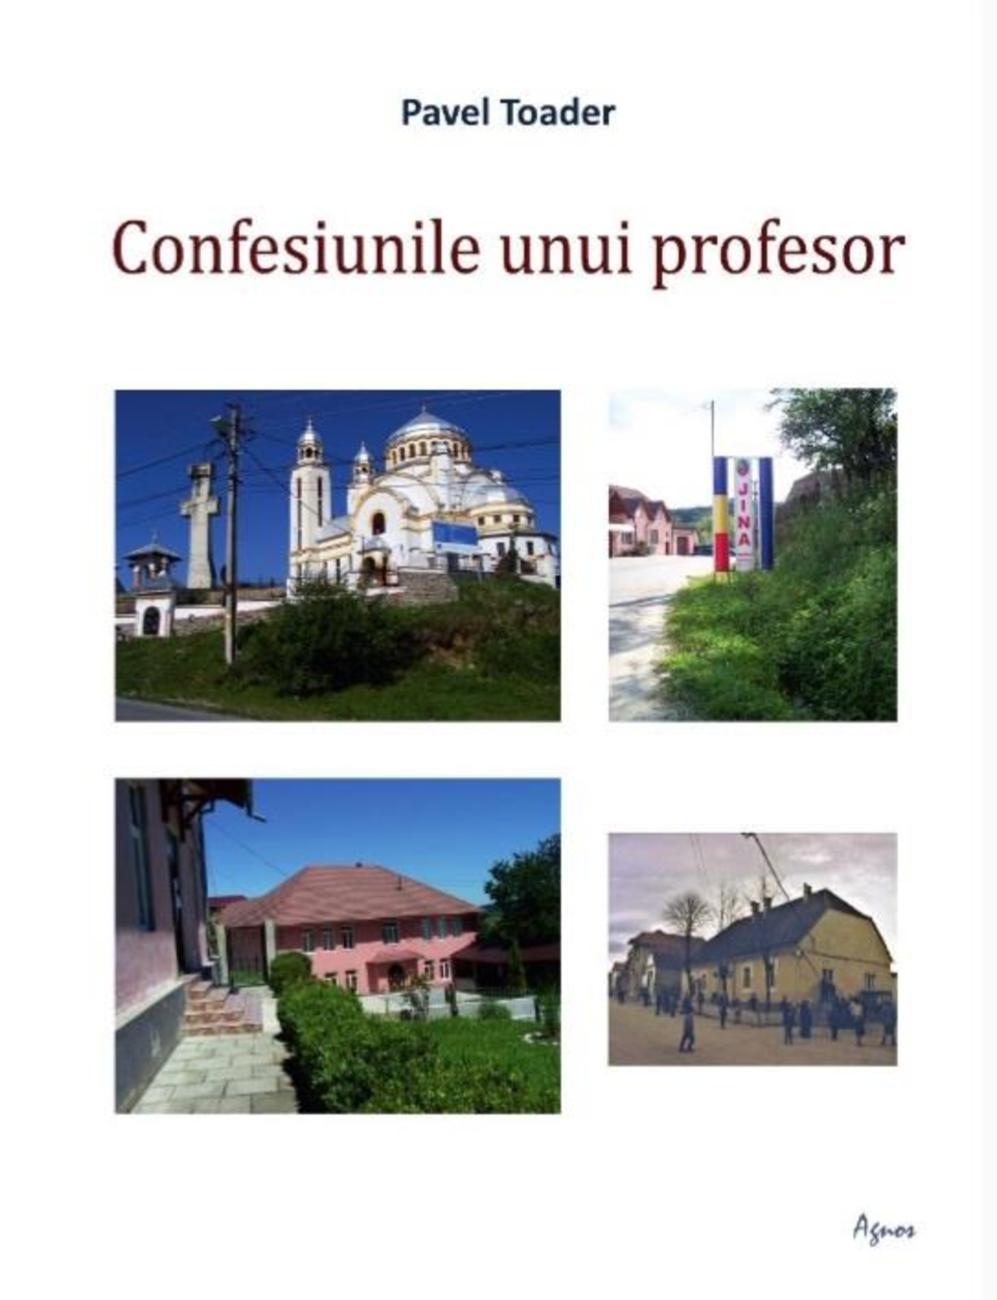 Pavel Toader, Confesiunile unui profesor, Sibiu, Editura Agnos, 2020